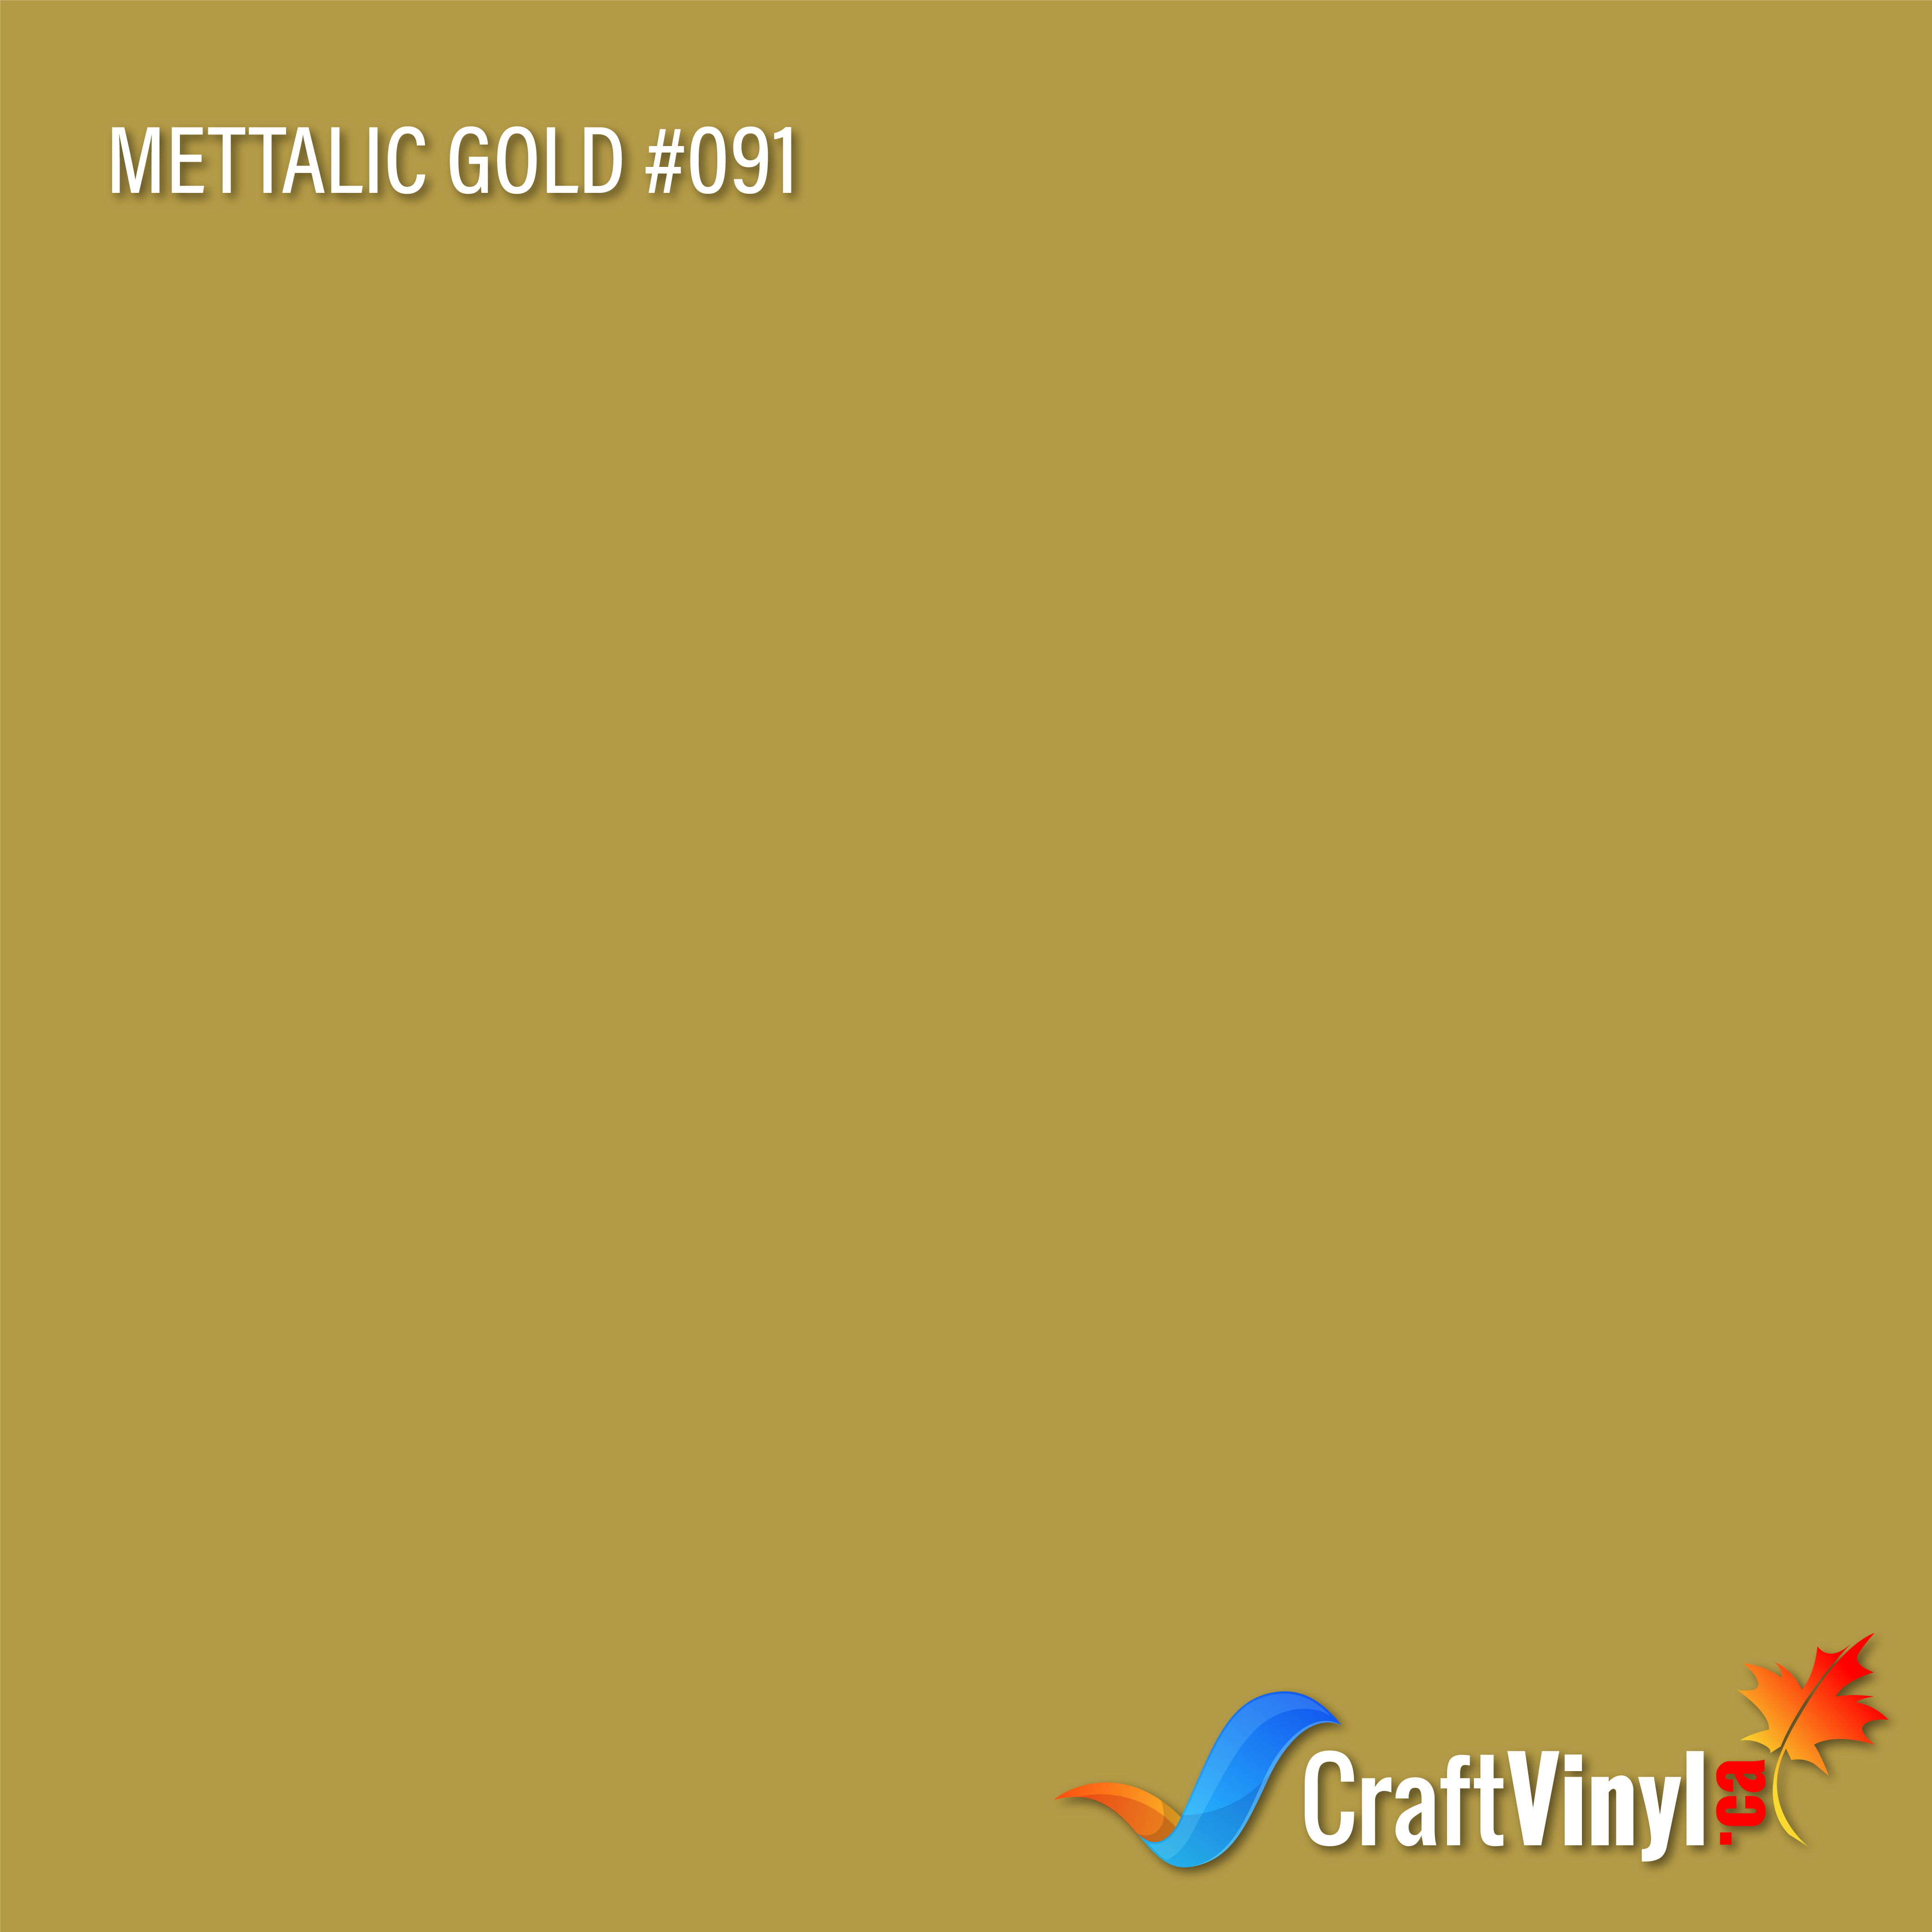 Oracal 651 - 12 x 10yd - Gold Metallic 091